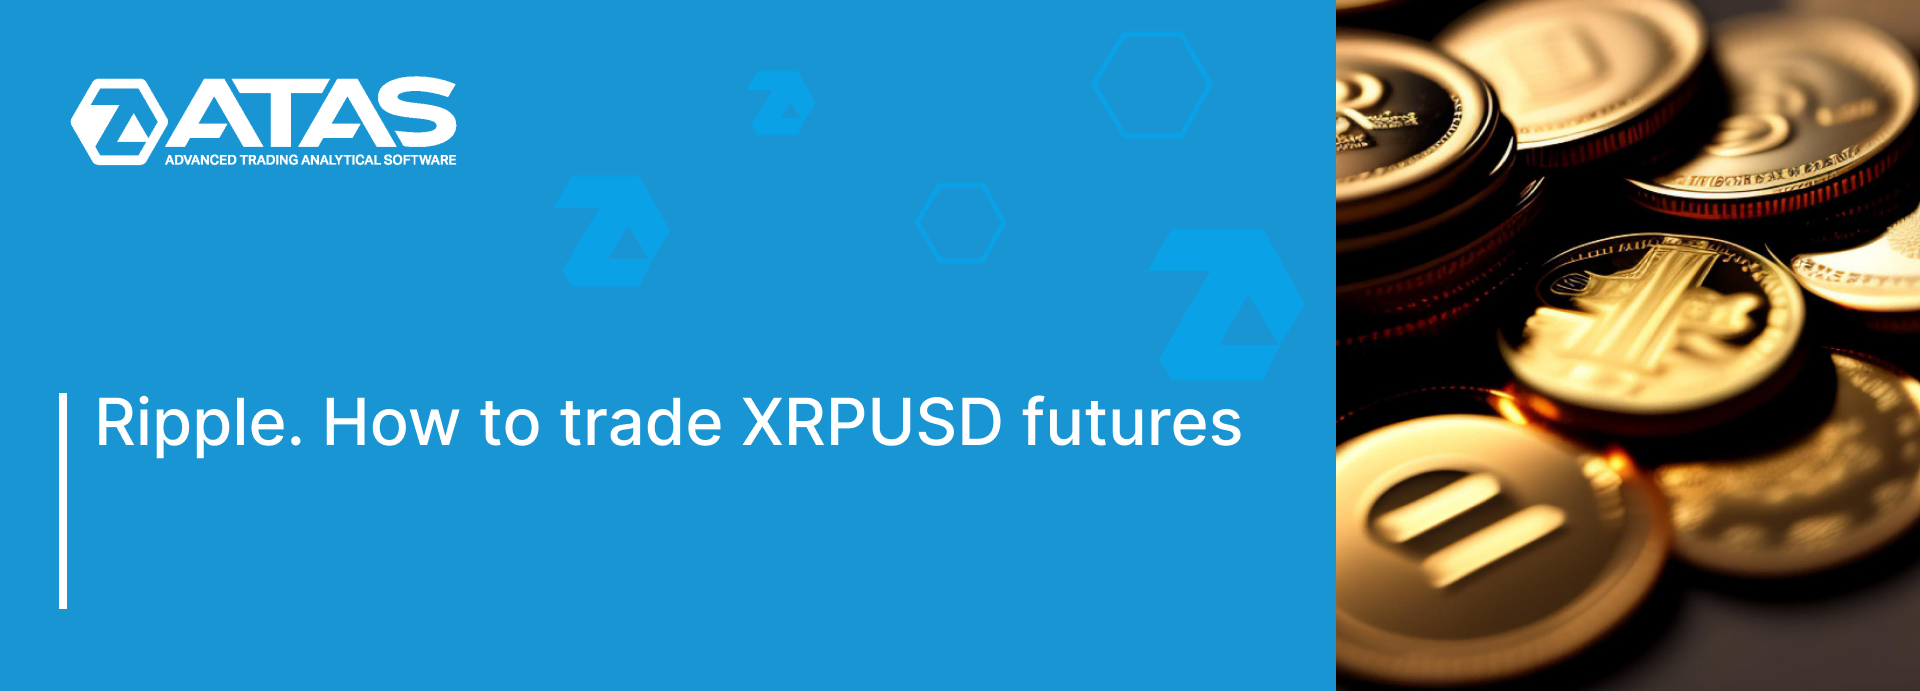 Ripple. How to trade XRPUSD futures